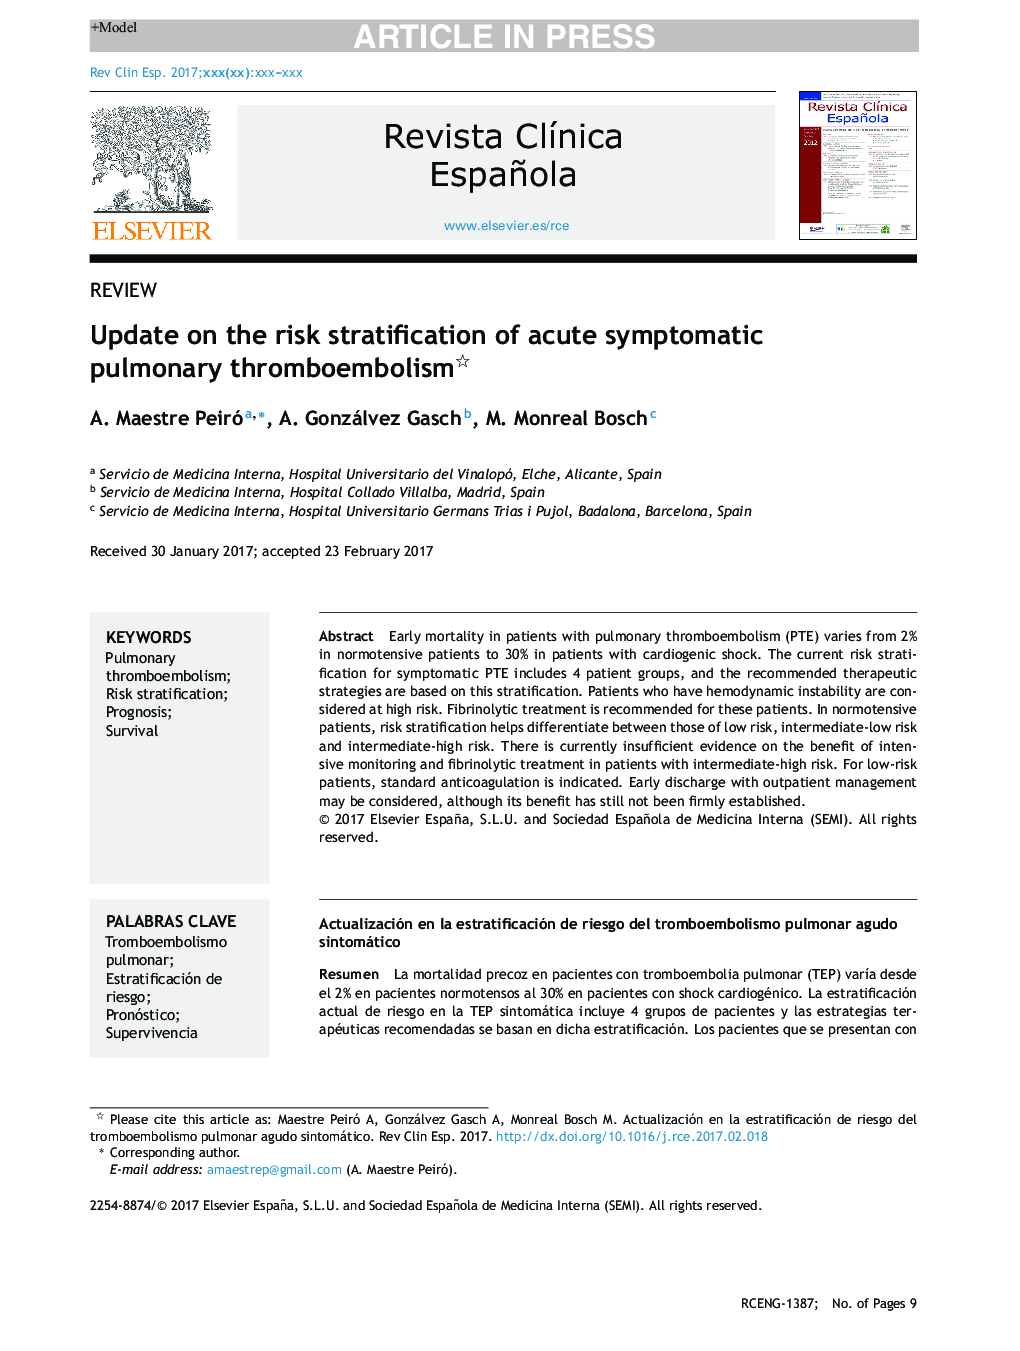 Update on the risk stratification of acute symptomatic pulmonary thromboembolism